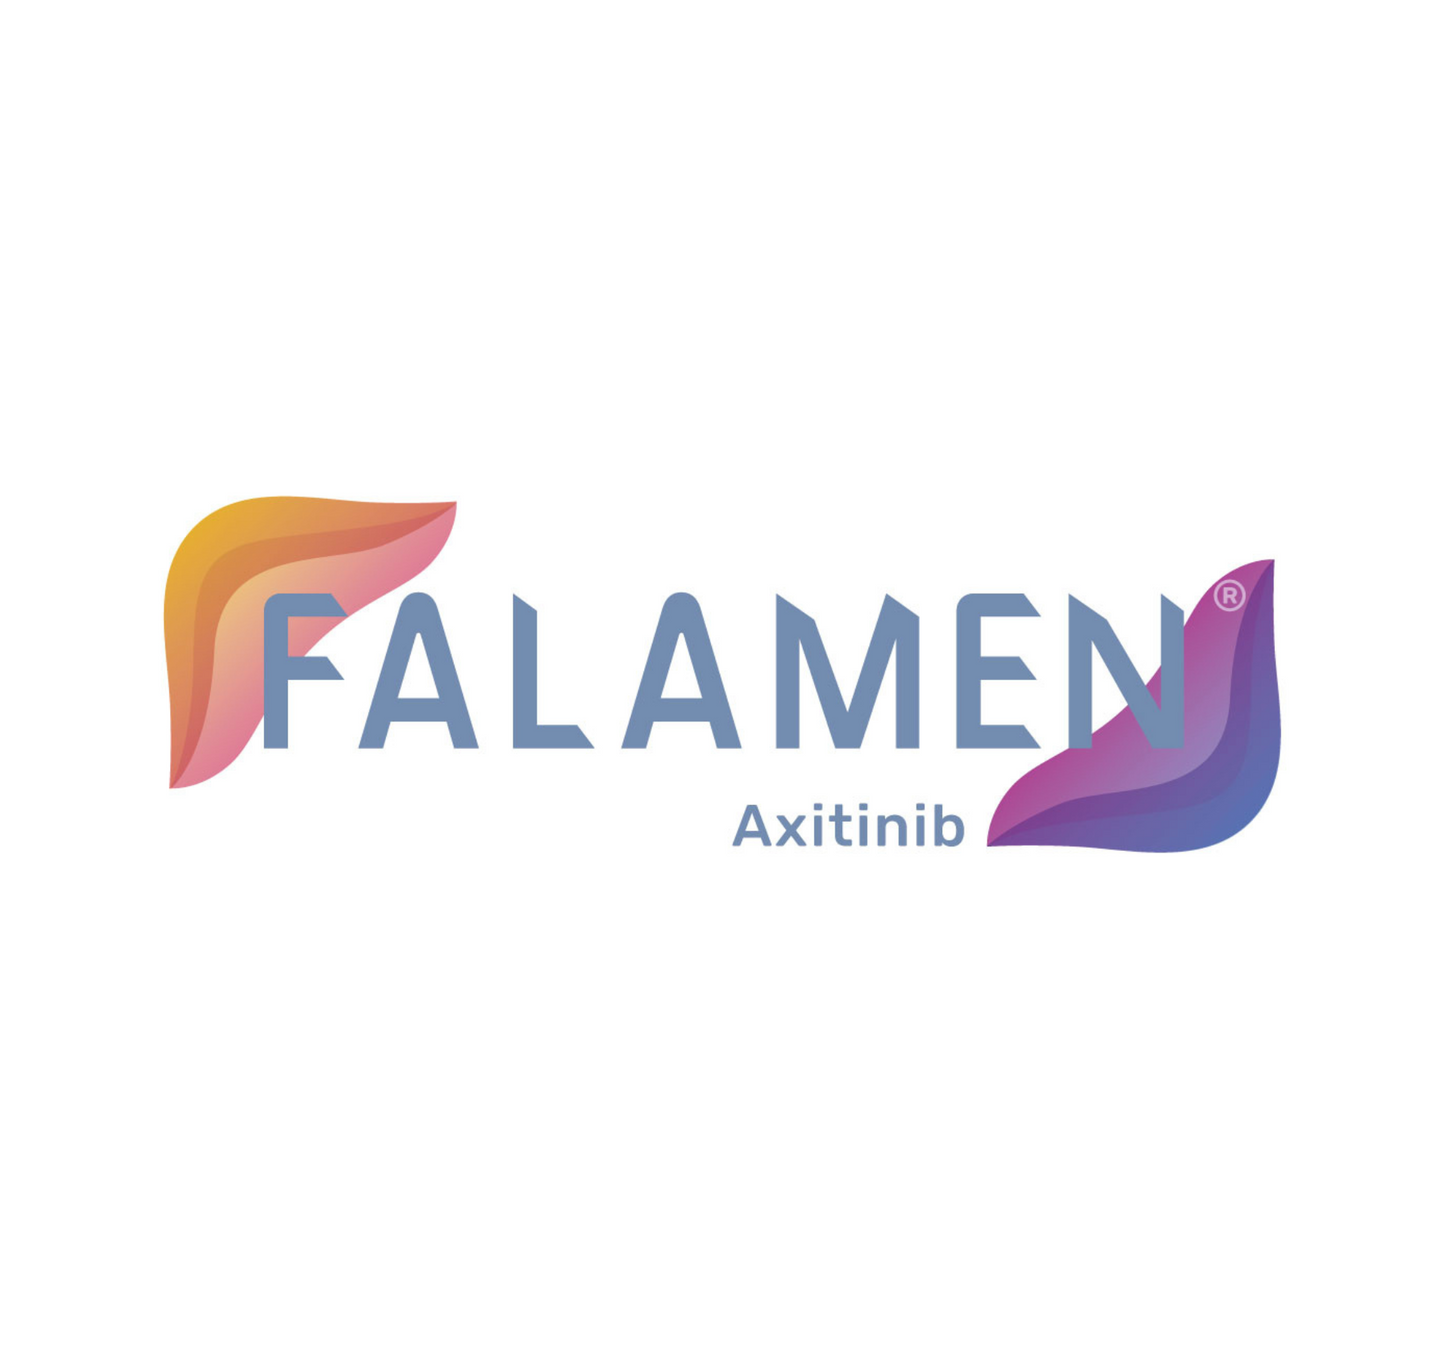 FALAMEN - AXITINIB